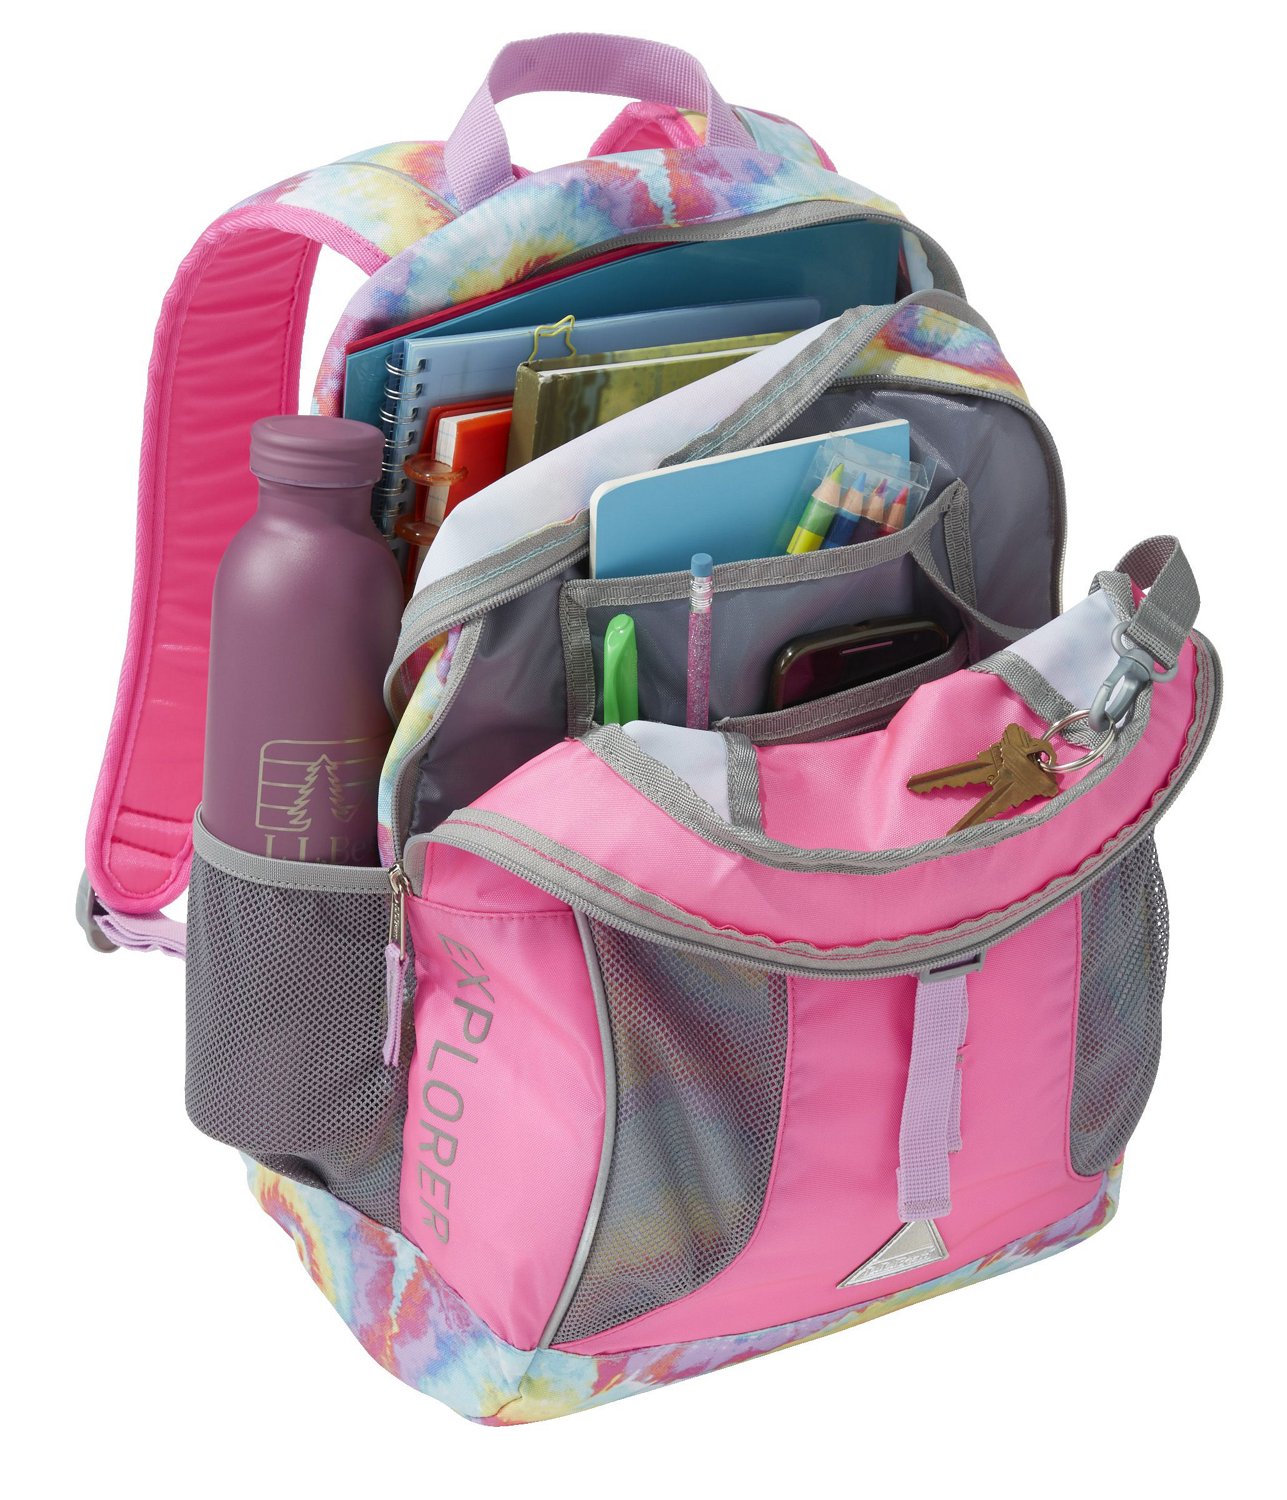 L.L. Bean Tie Dye Artwork Explorer School Backpack - Each